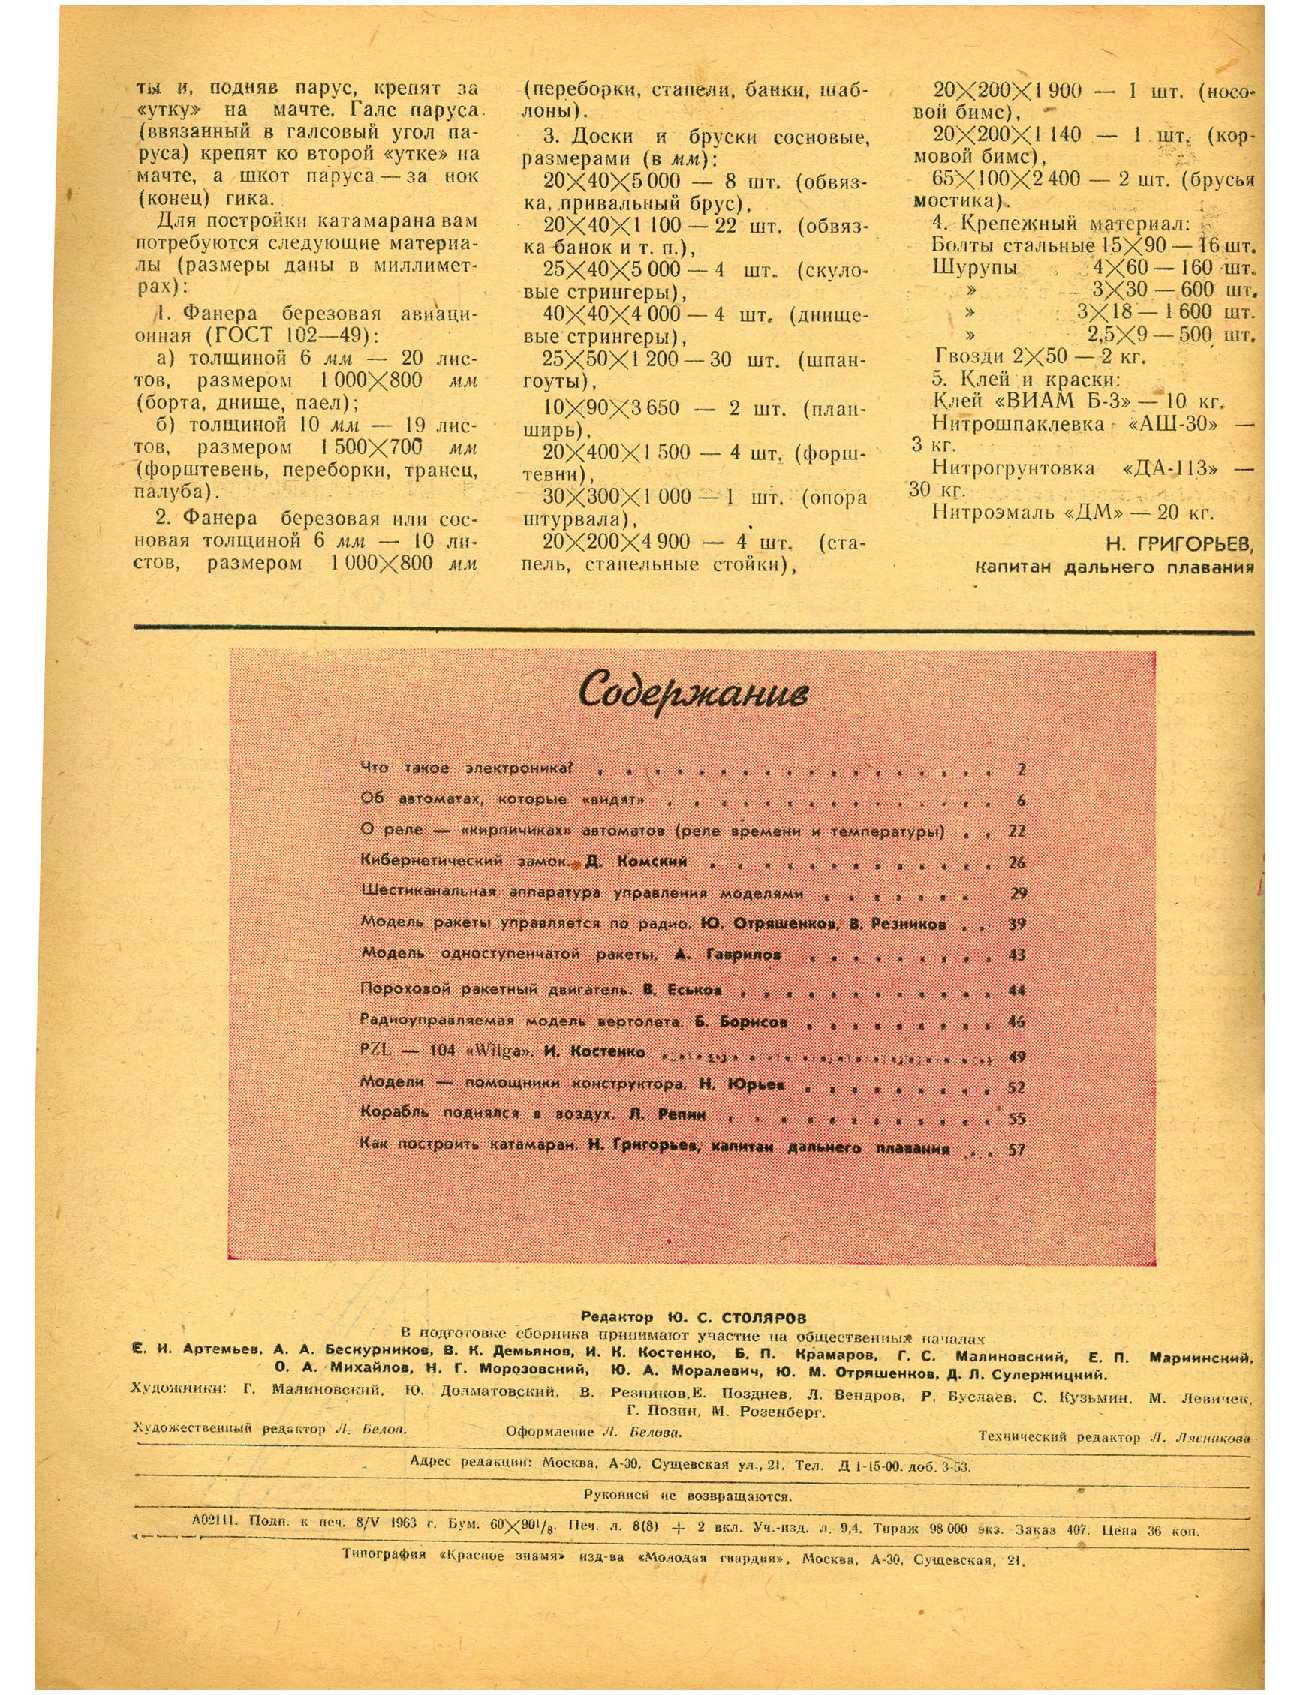 ЮМК 5, 1963, 64 c.